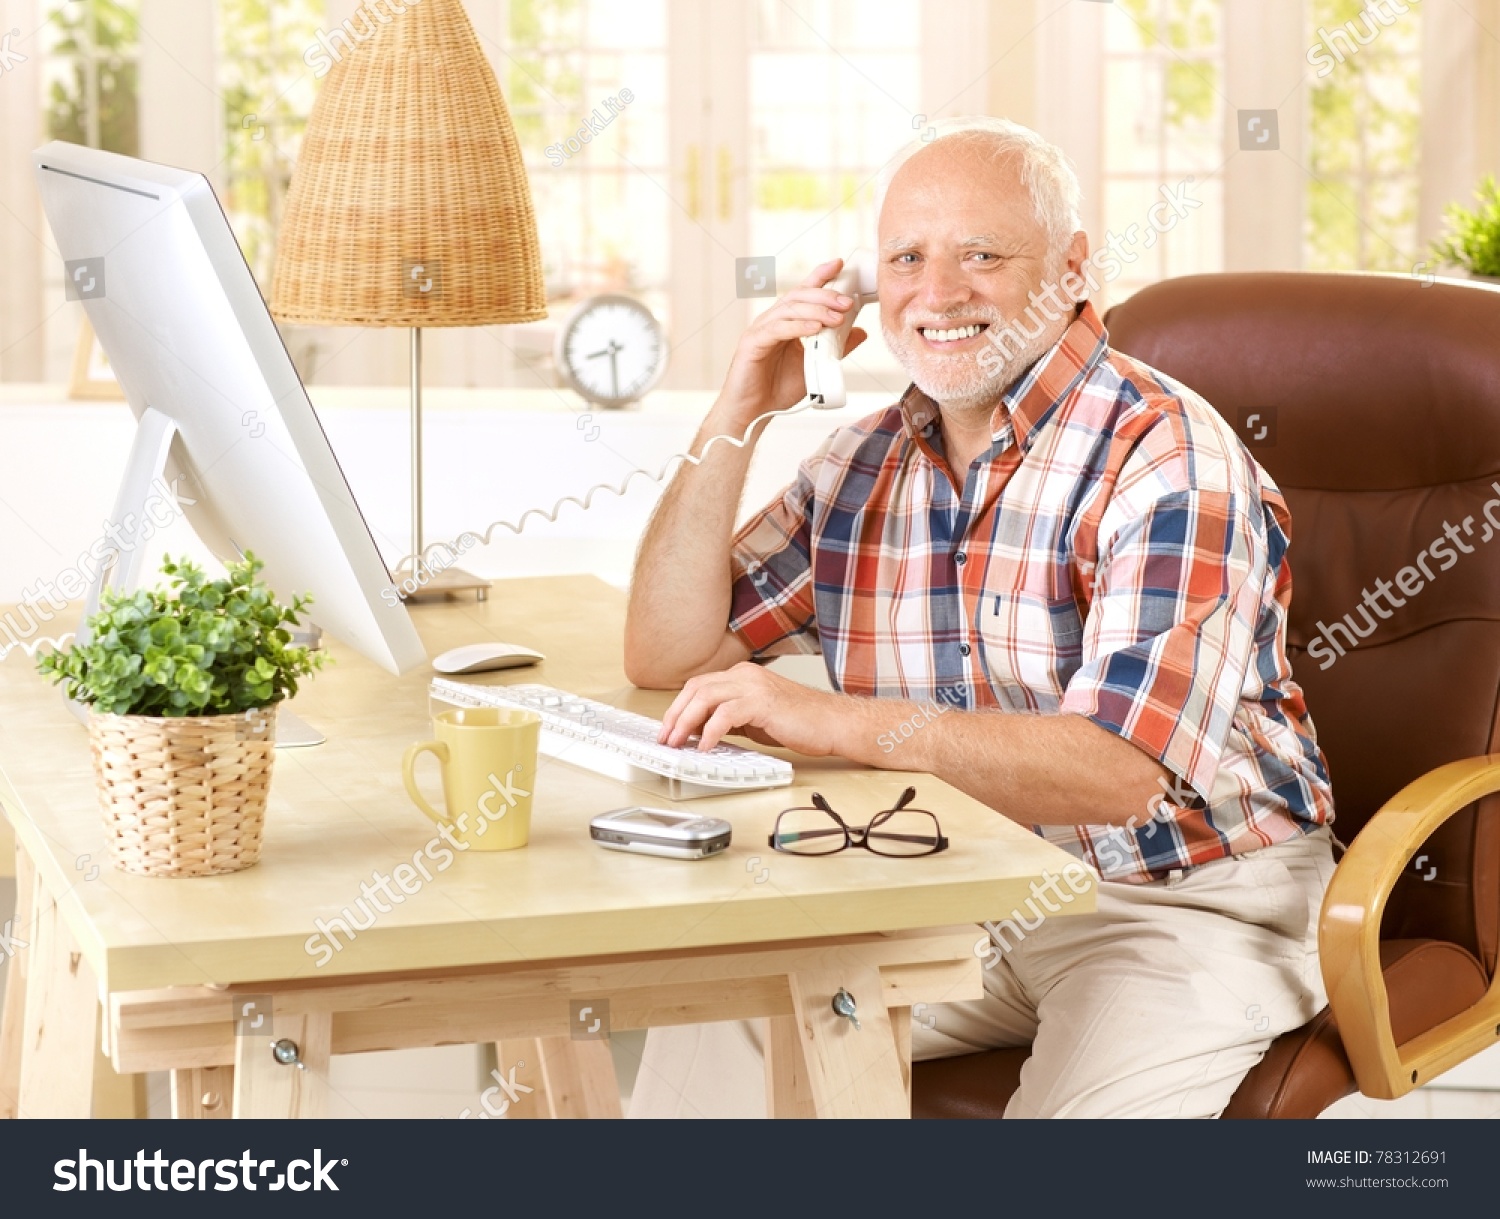 stock-photo-happy-old-man-on-landline-call-sitting-at-desk-using-computer-smiling-looking-at-camera-78312691.jpg